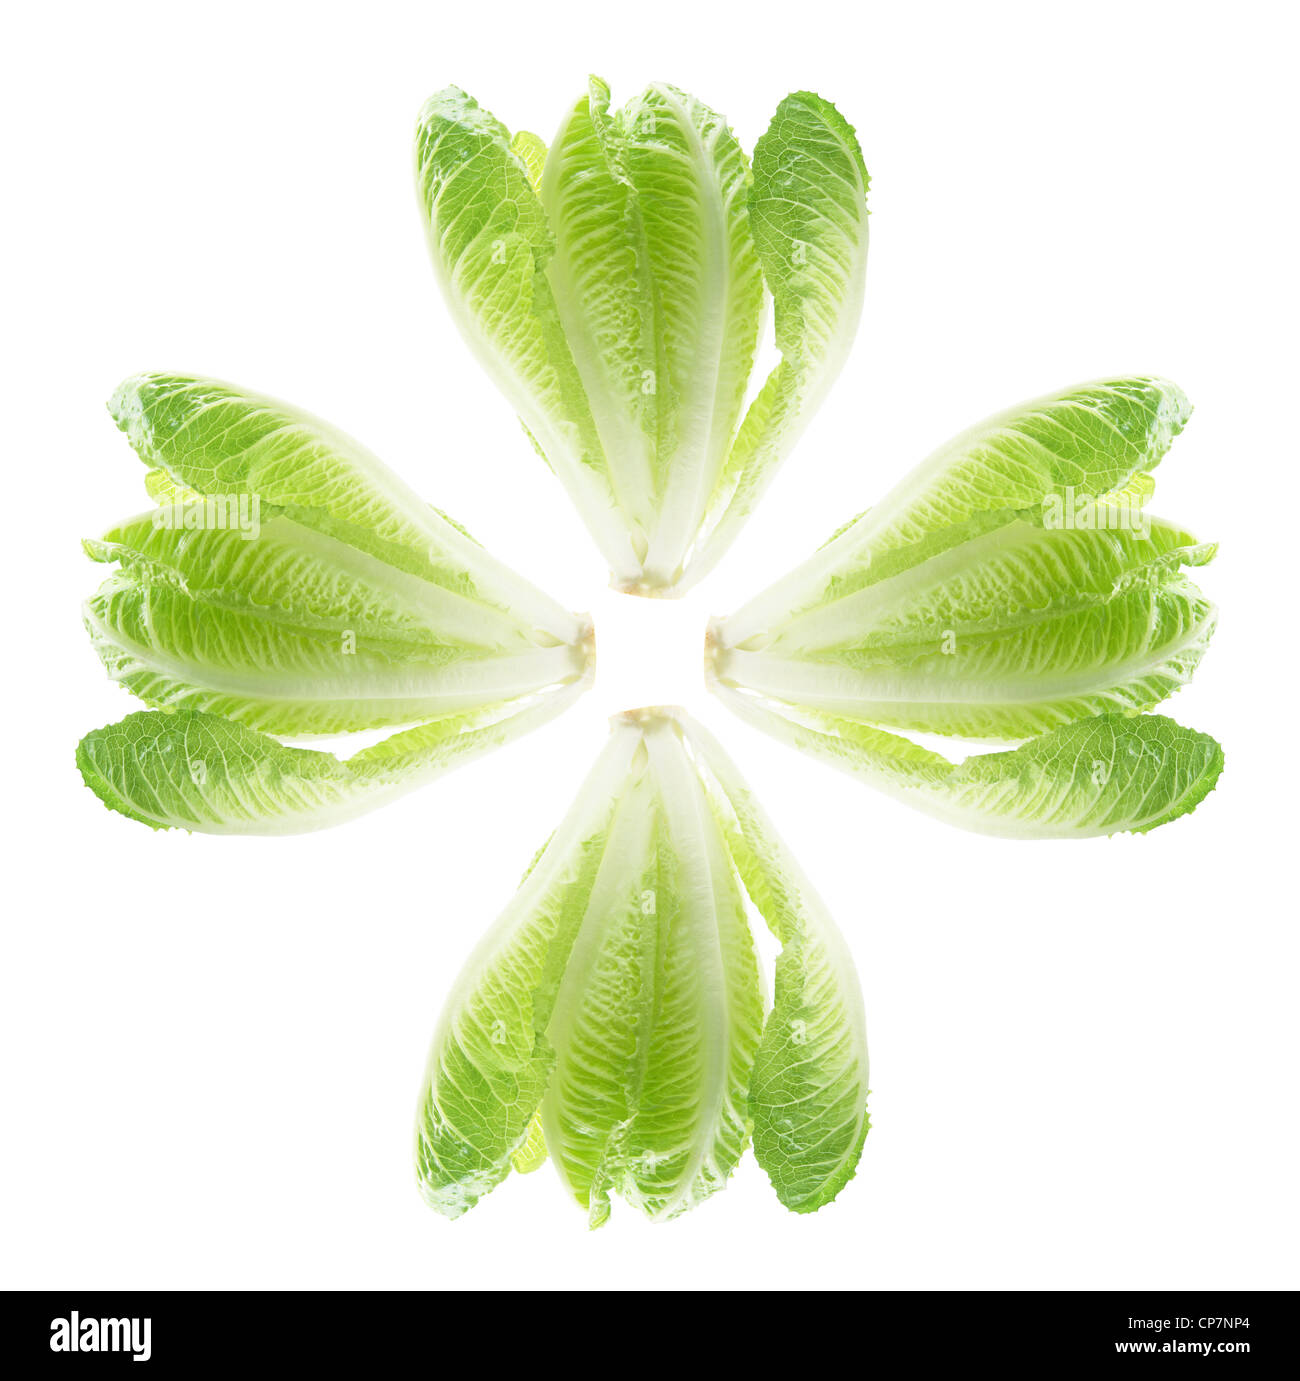 Cos Lettuce Leaves Stock Photo